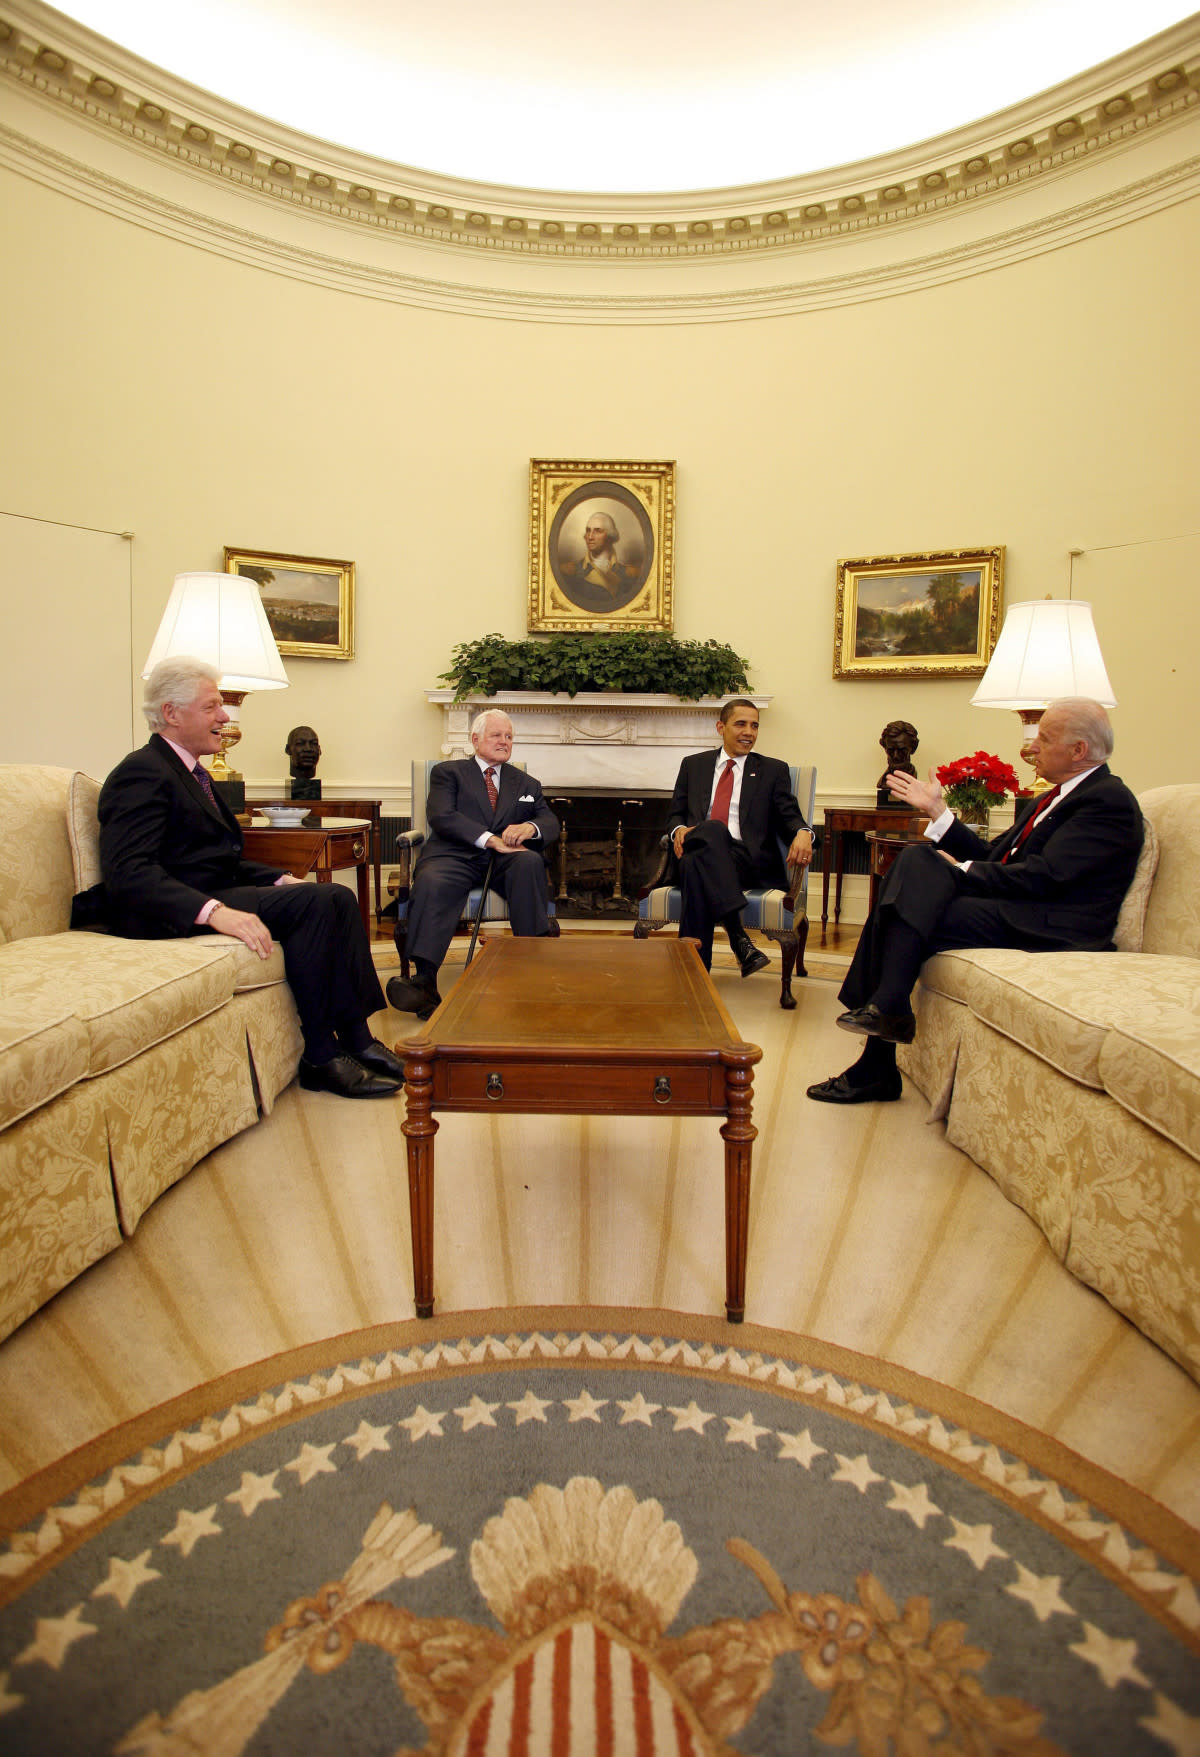 20230802-image-dpa-mb-Obama trifft Clinton, Kennedy und Biden im Oval Office (2009)